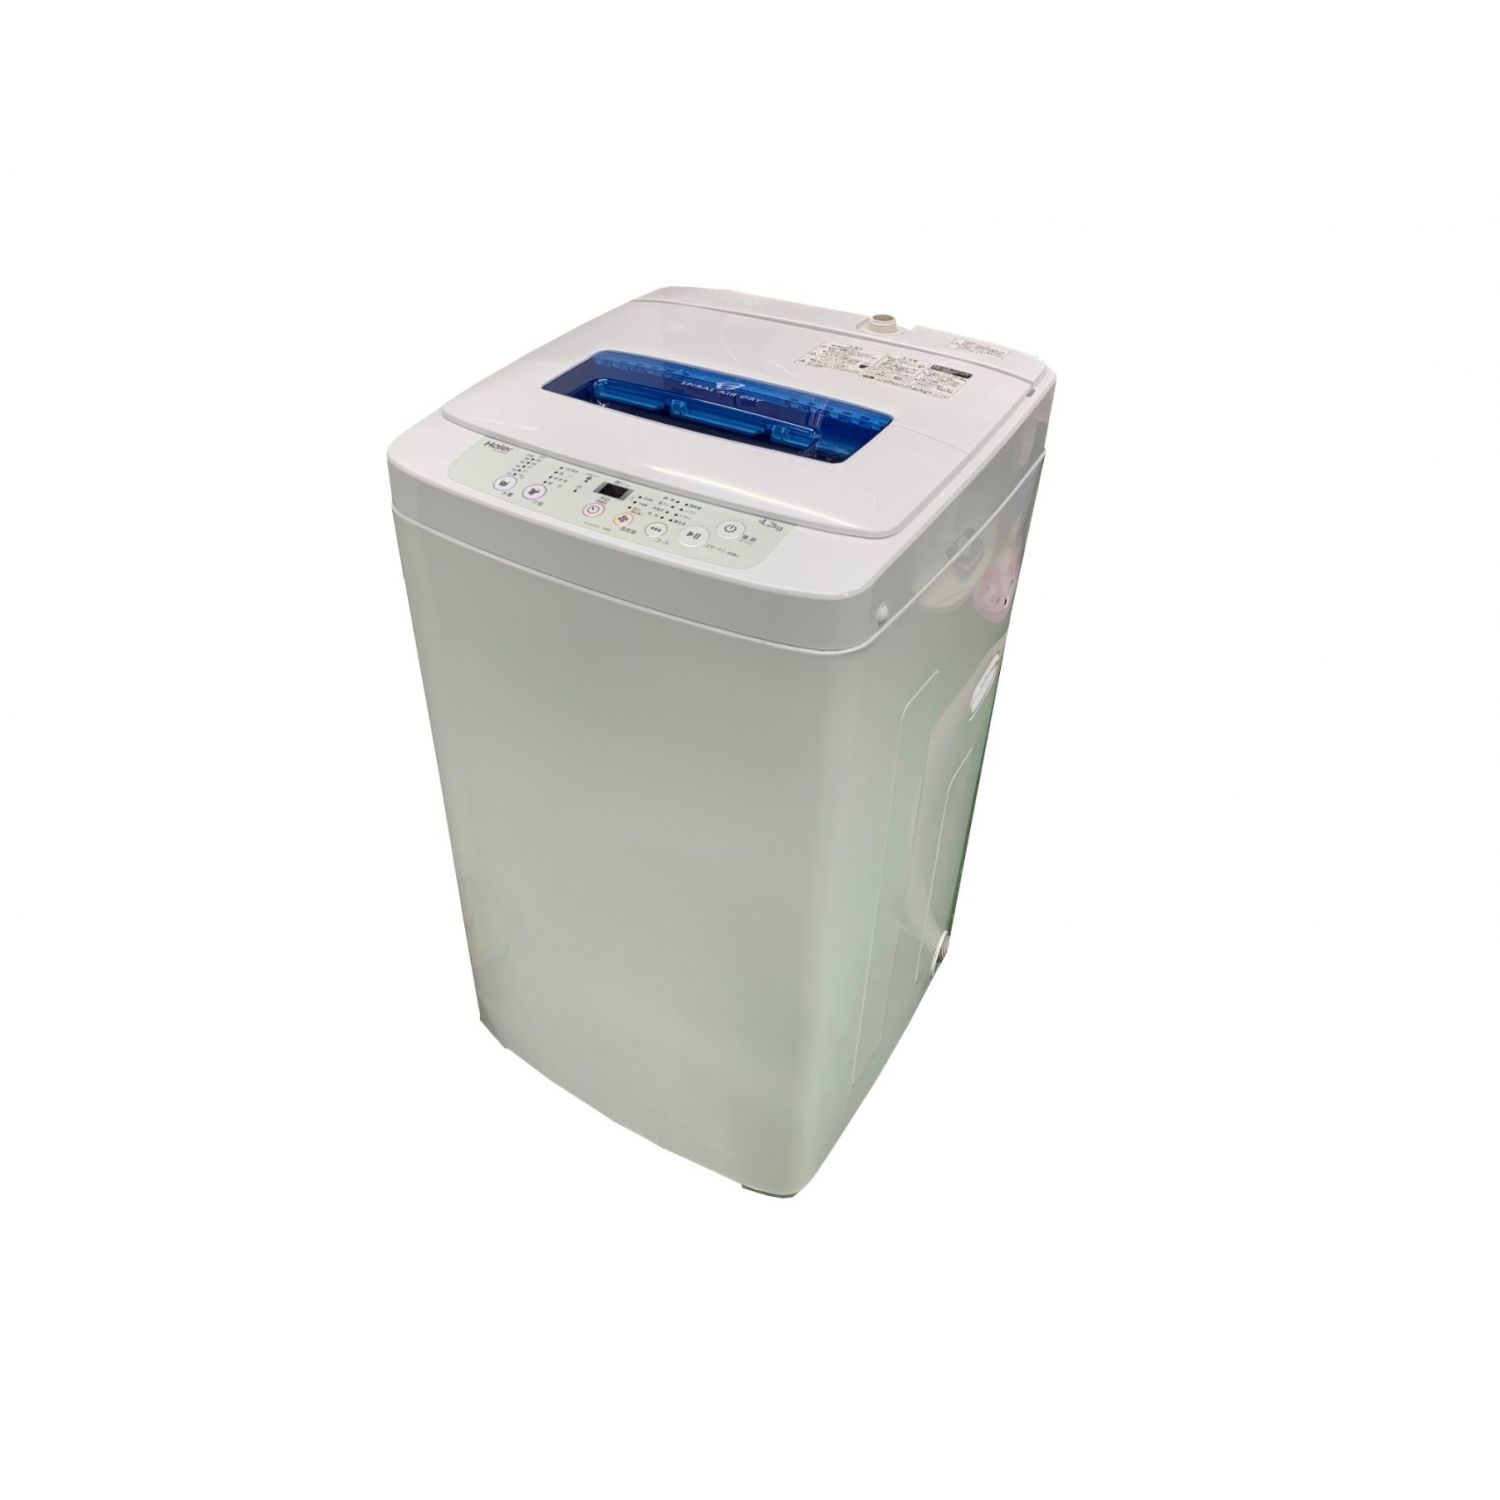 ハイアール全自動洗濯機4.2kg - 洗濯機